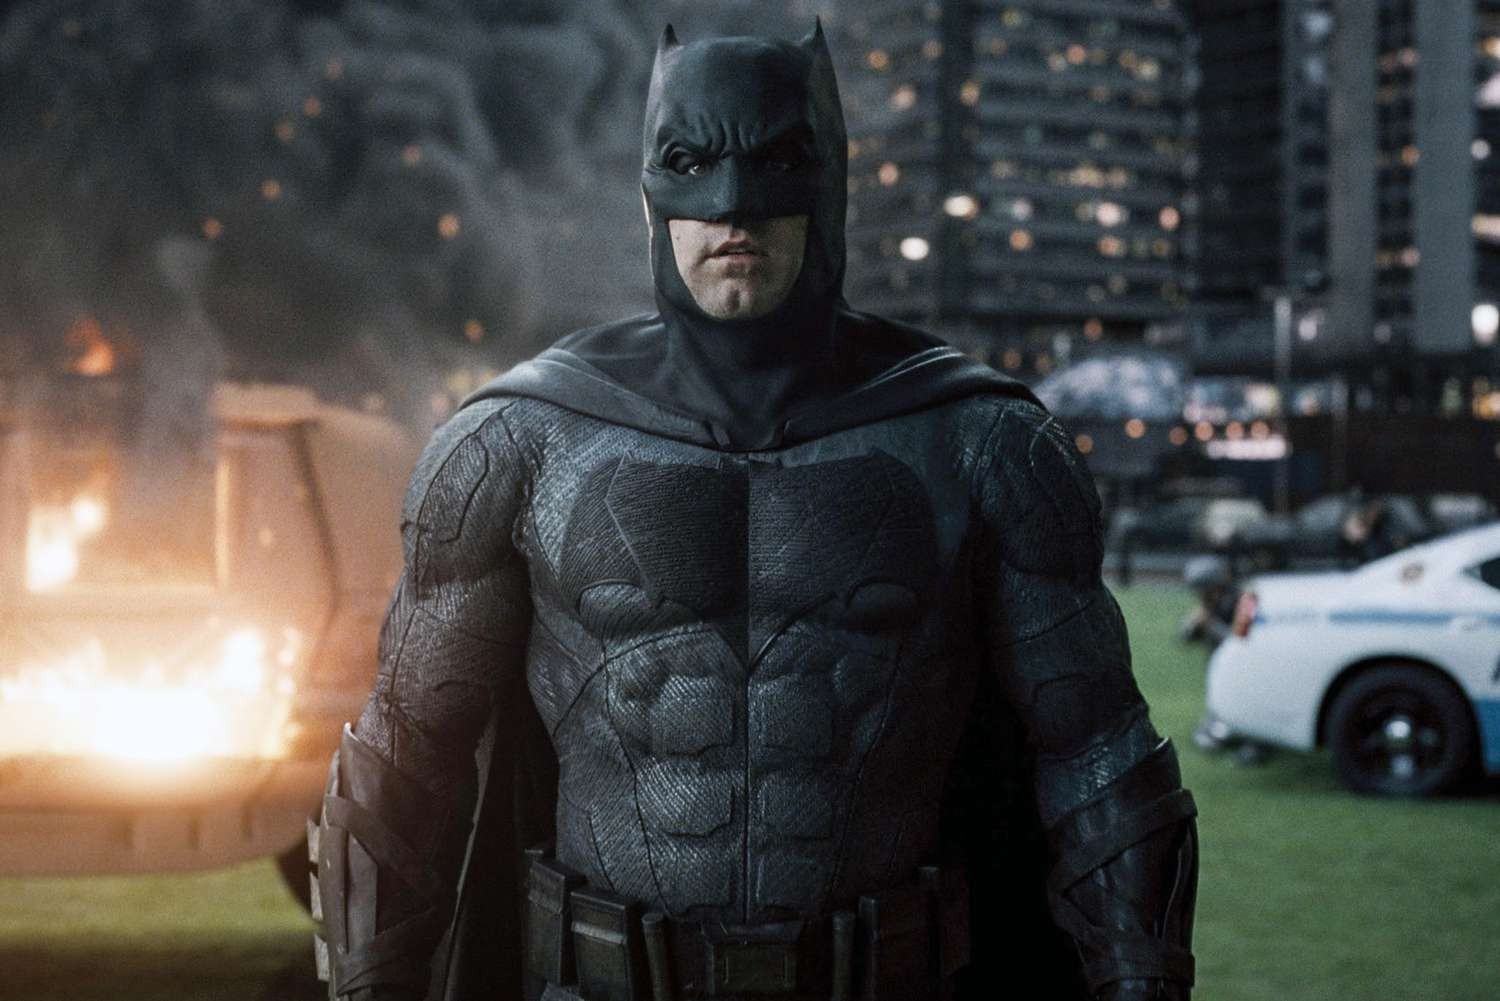 Ben Affleck as Batman in a still from Justice League